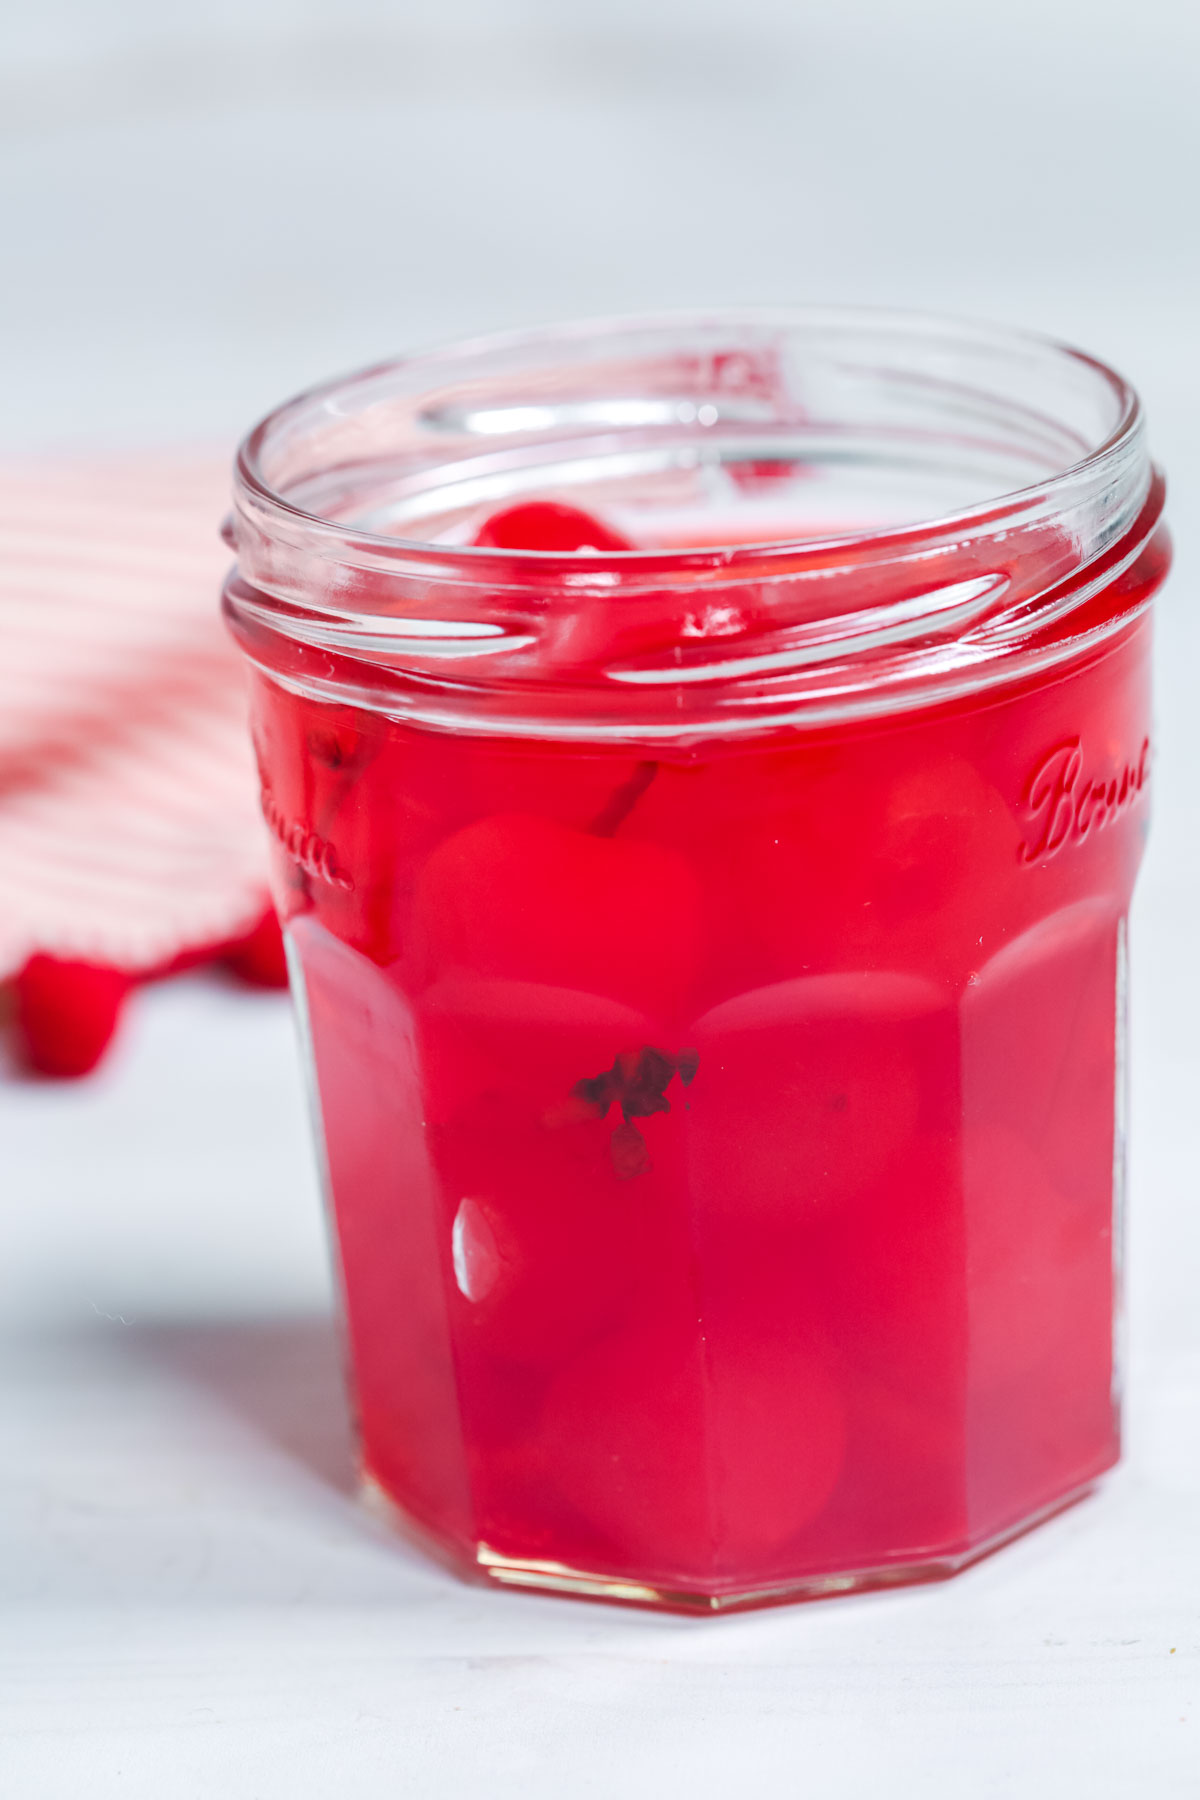 Cherries in moonshine in a jar.